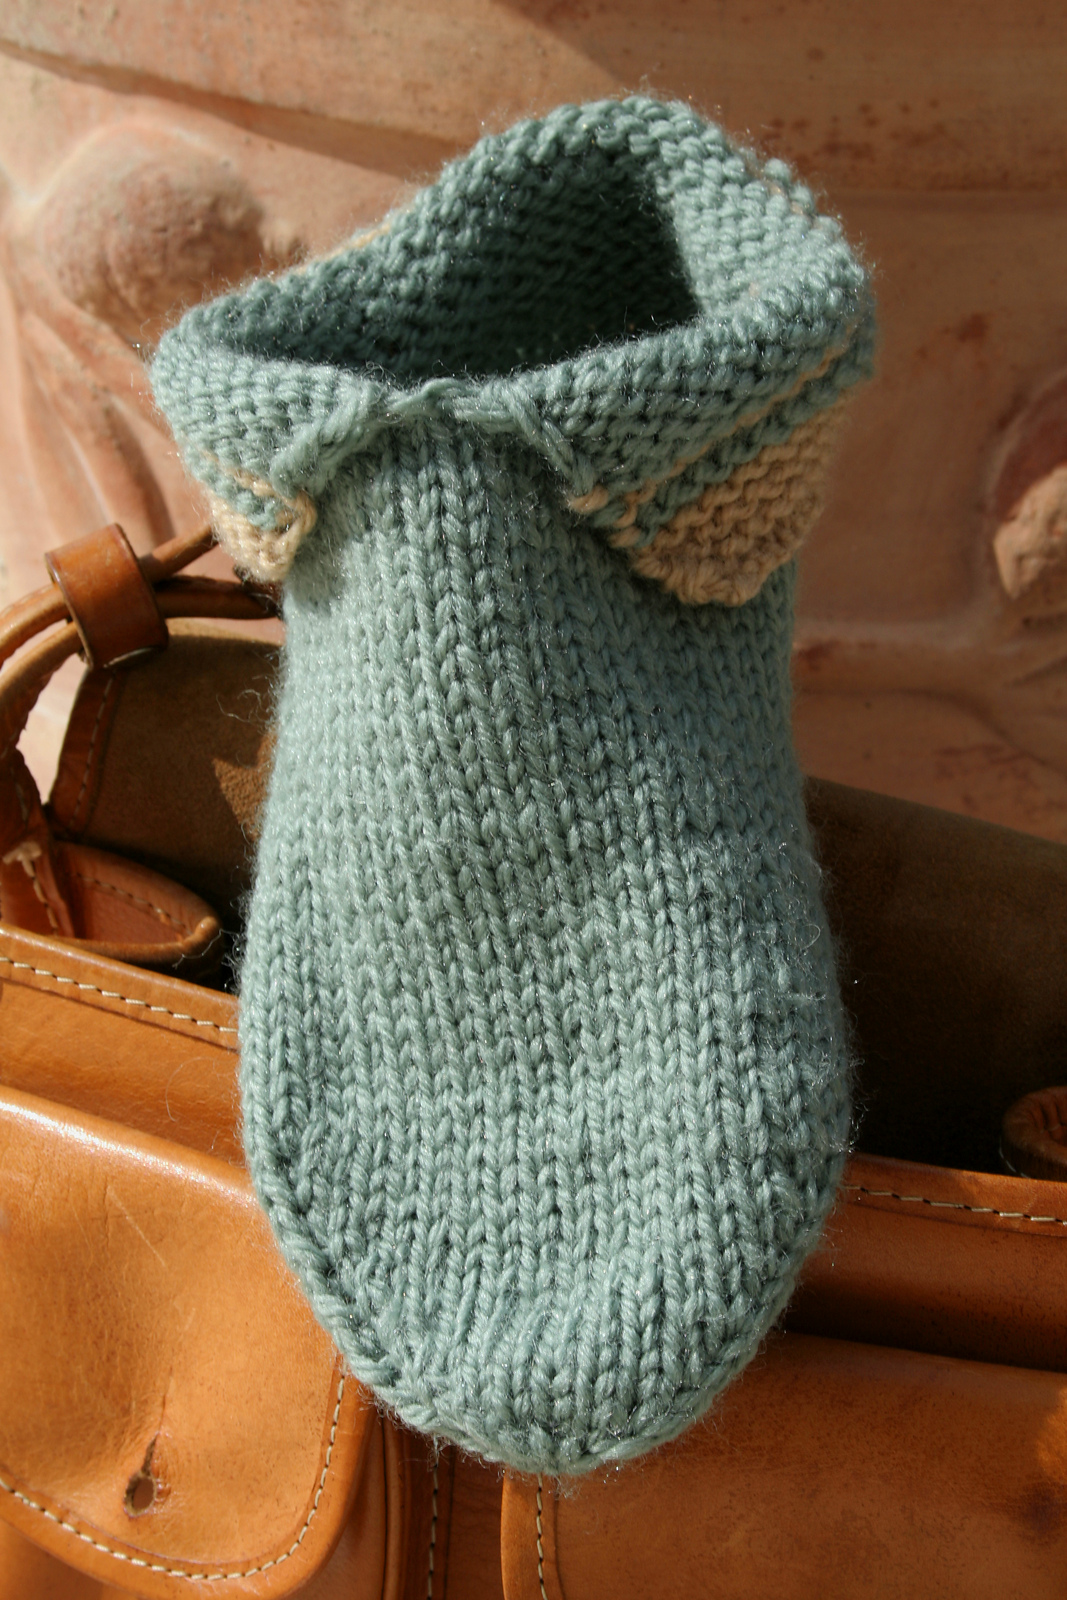 Slipper Knitting Patterns | In the Loop Knitting